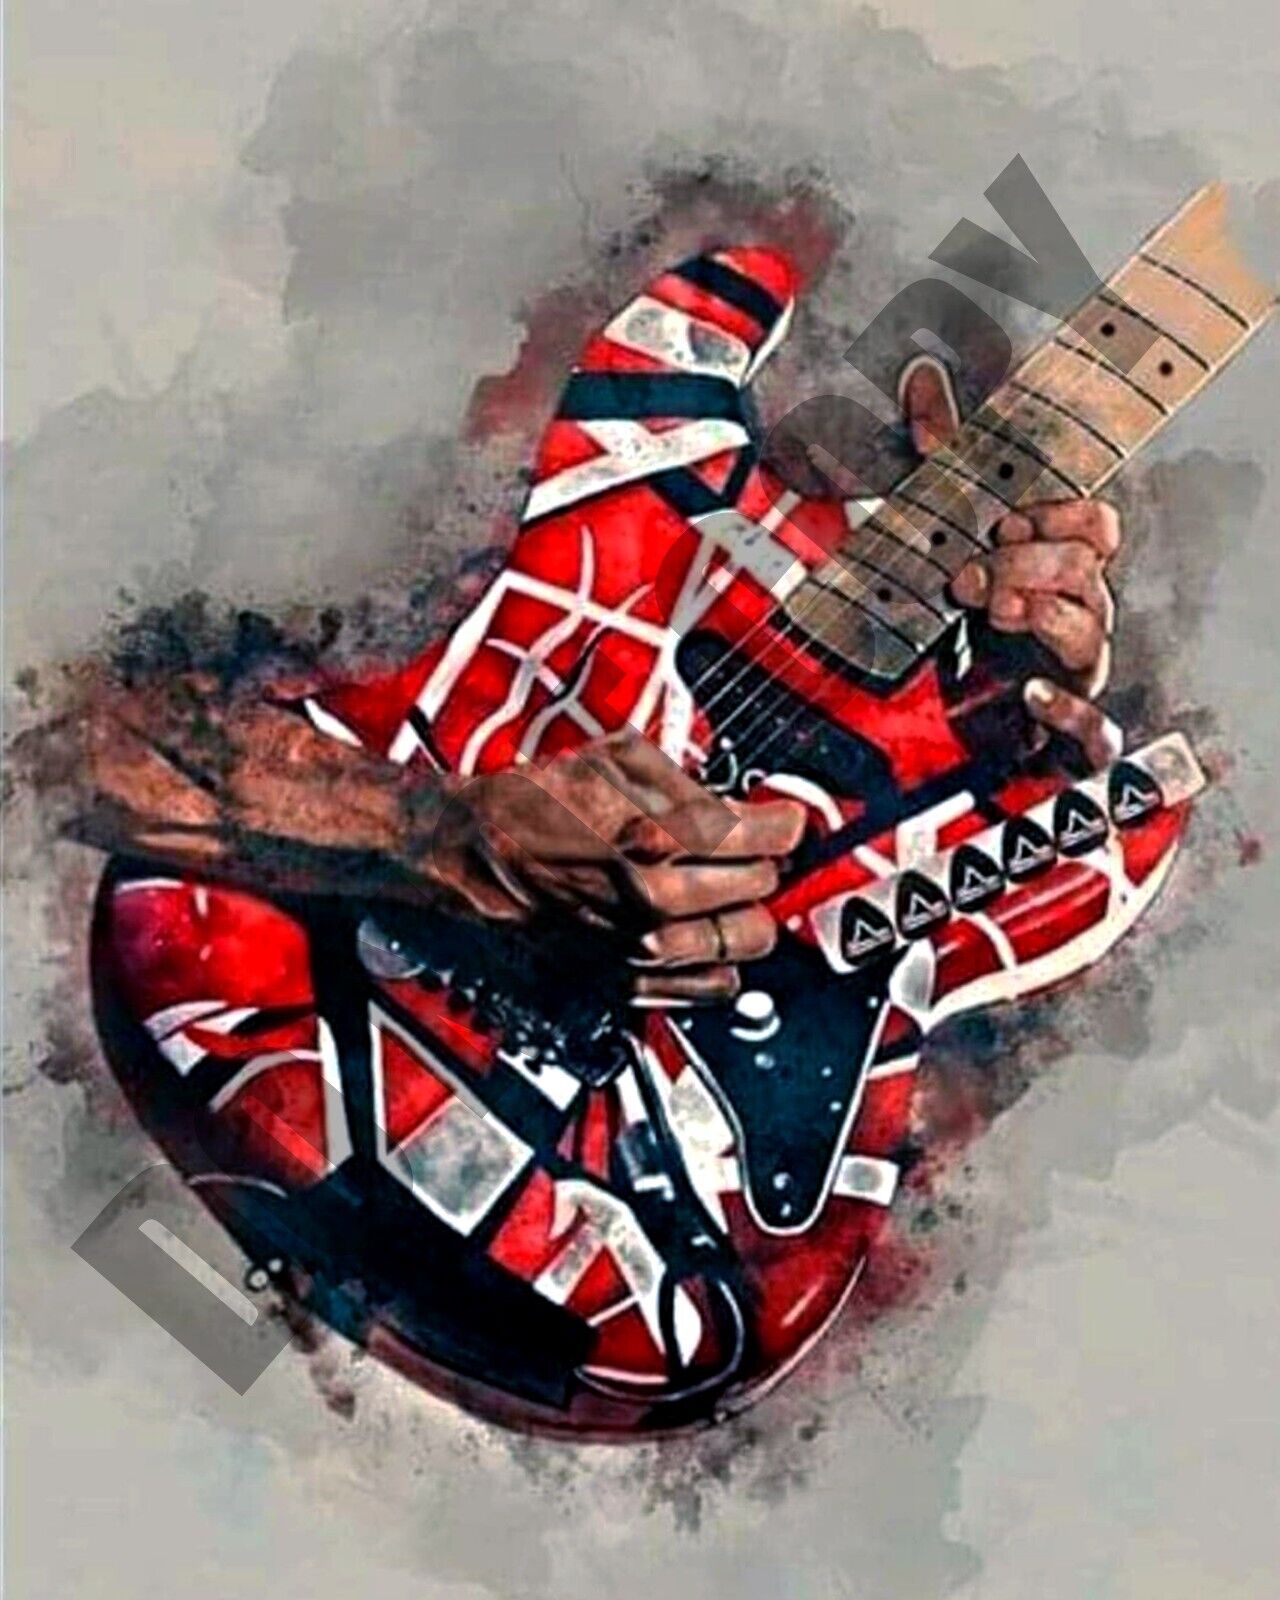 Eddie Van Halen Playing Guitar In Concert Smoke Art 8x10 Photo